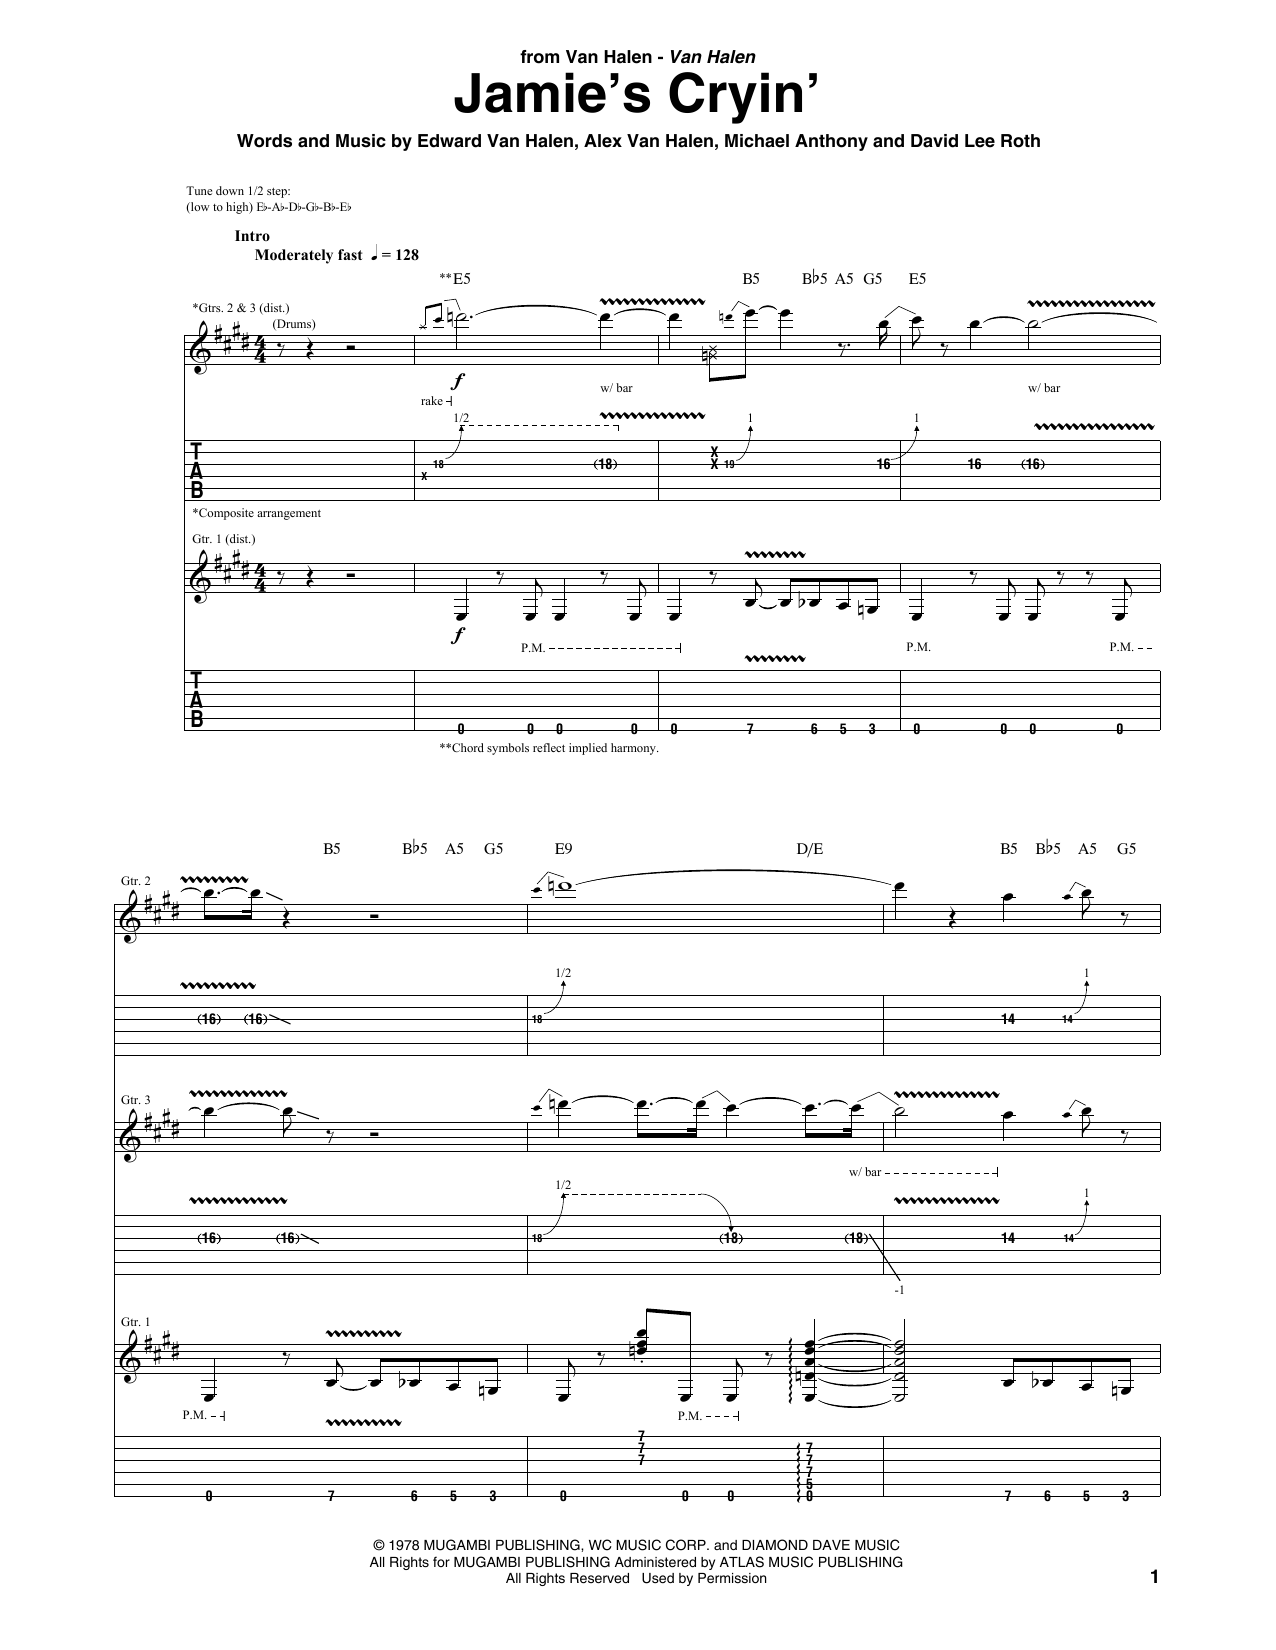 Van Halen Jamie's Cryin' Sheet Music Notes & Chords for Guitar Lead Sheet - Download or Print PDF